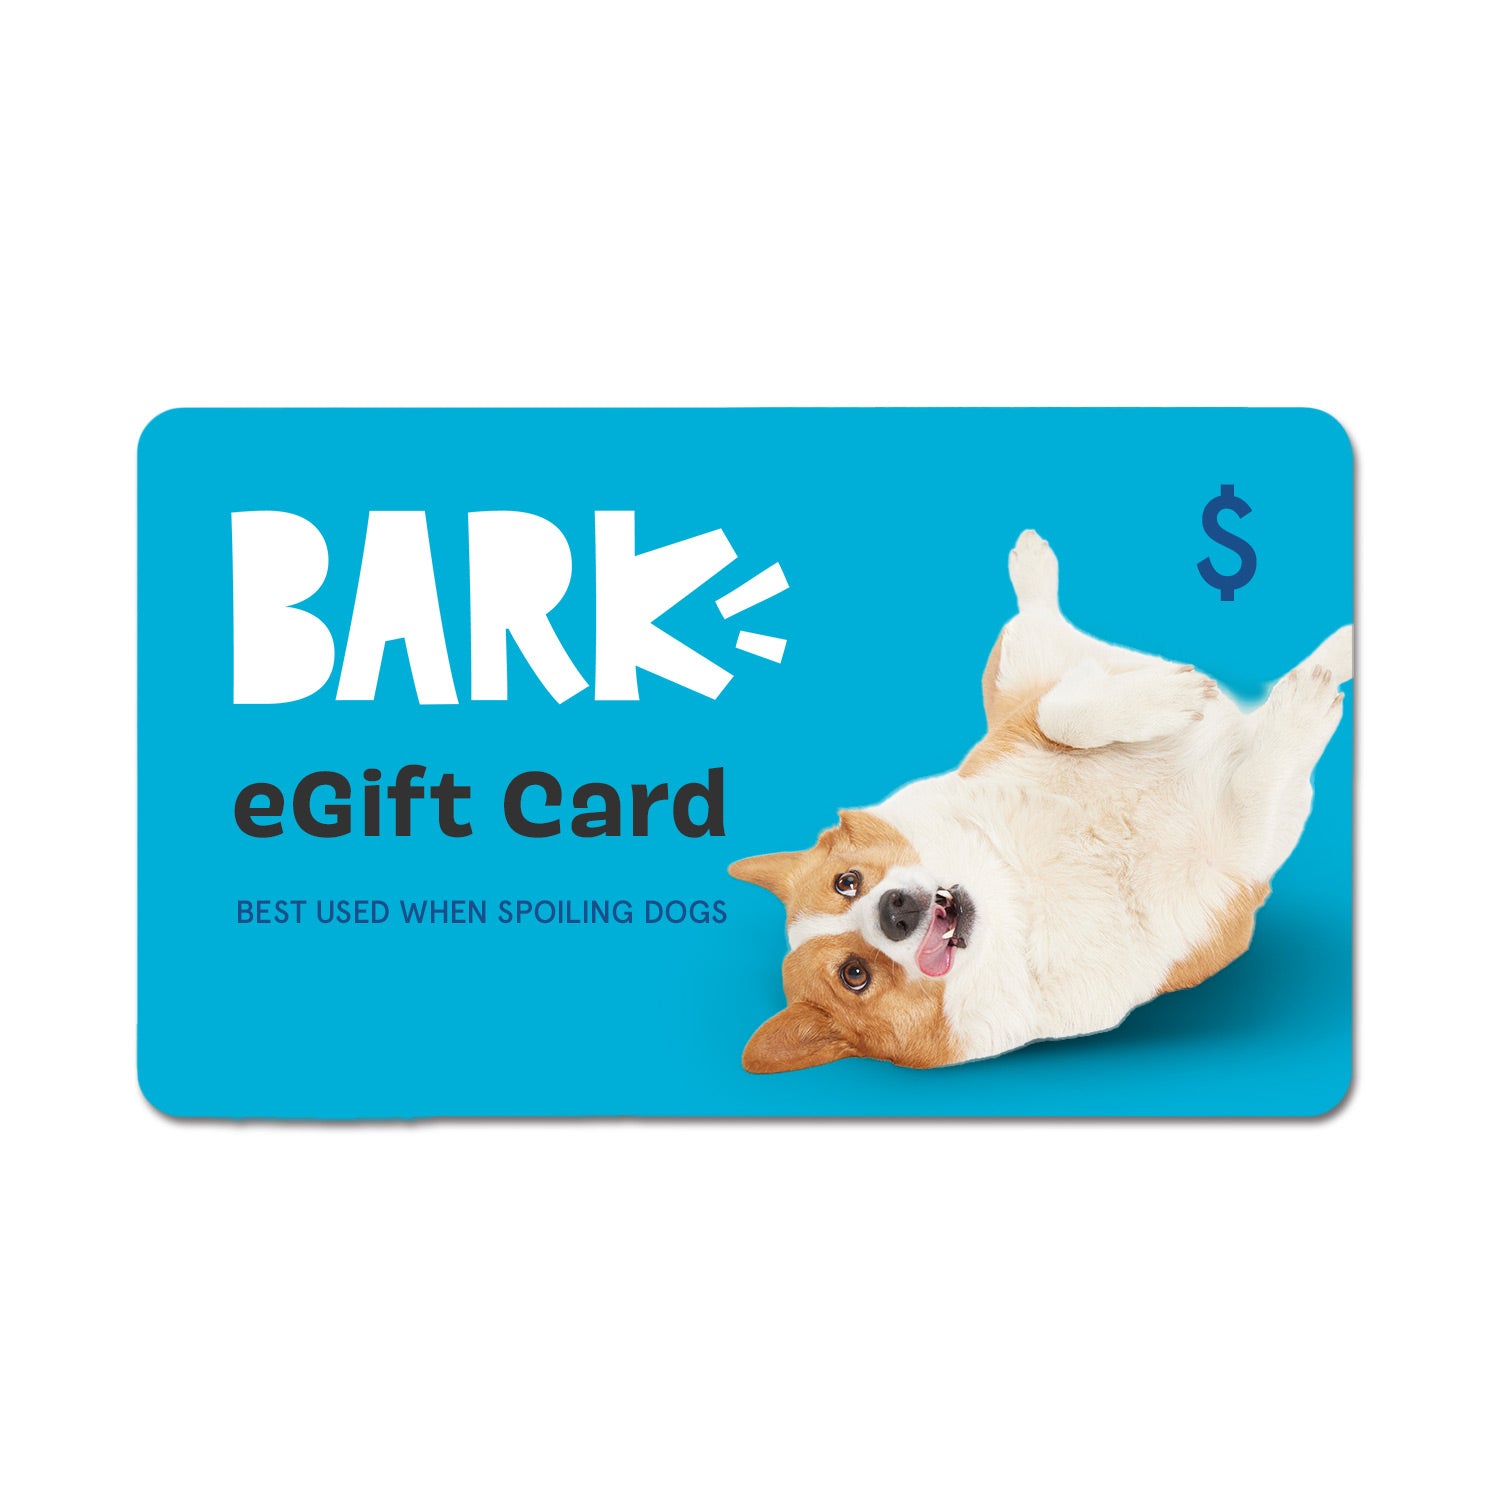 BARK eGift Card